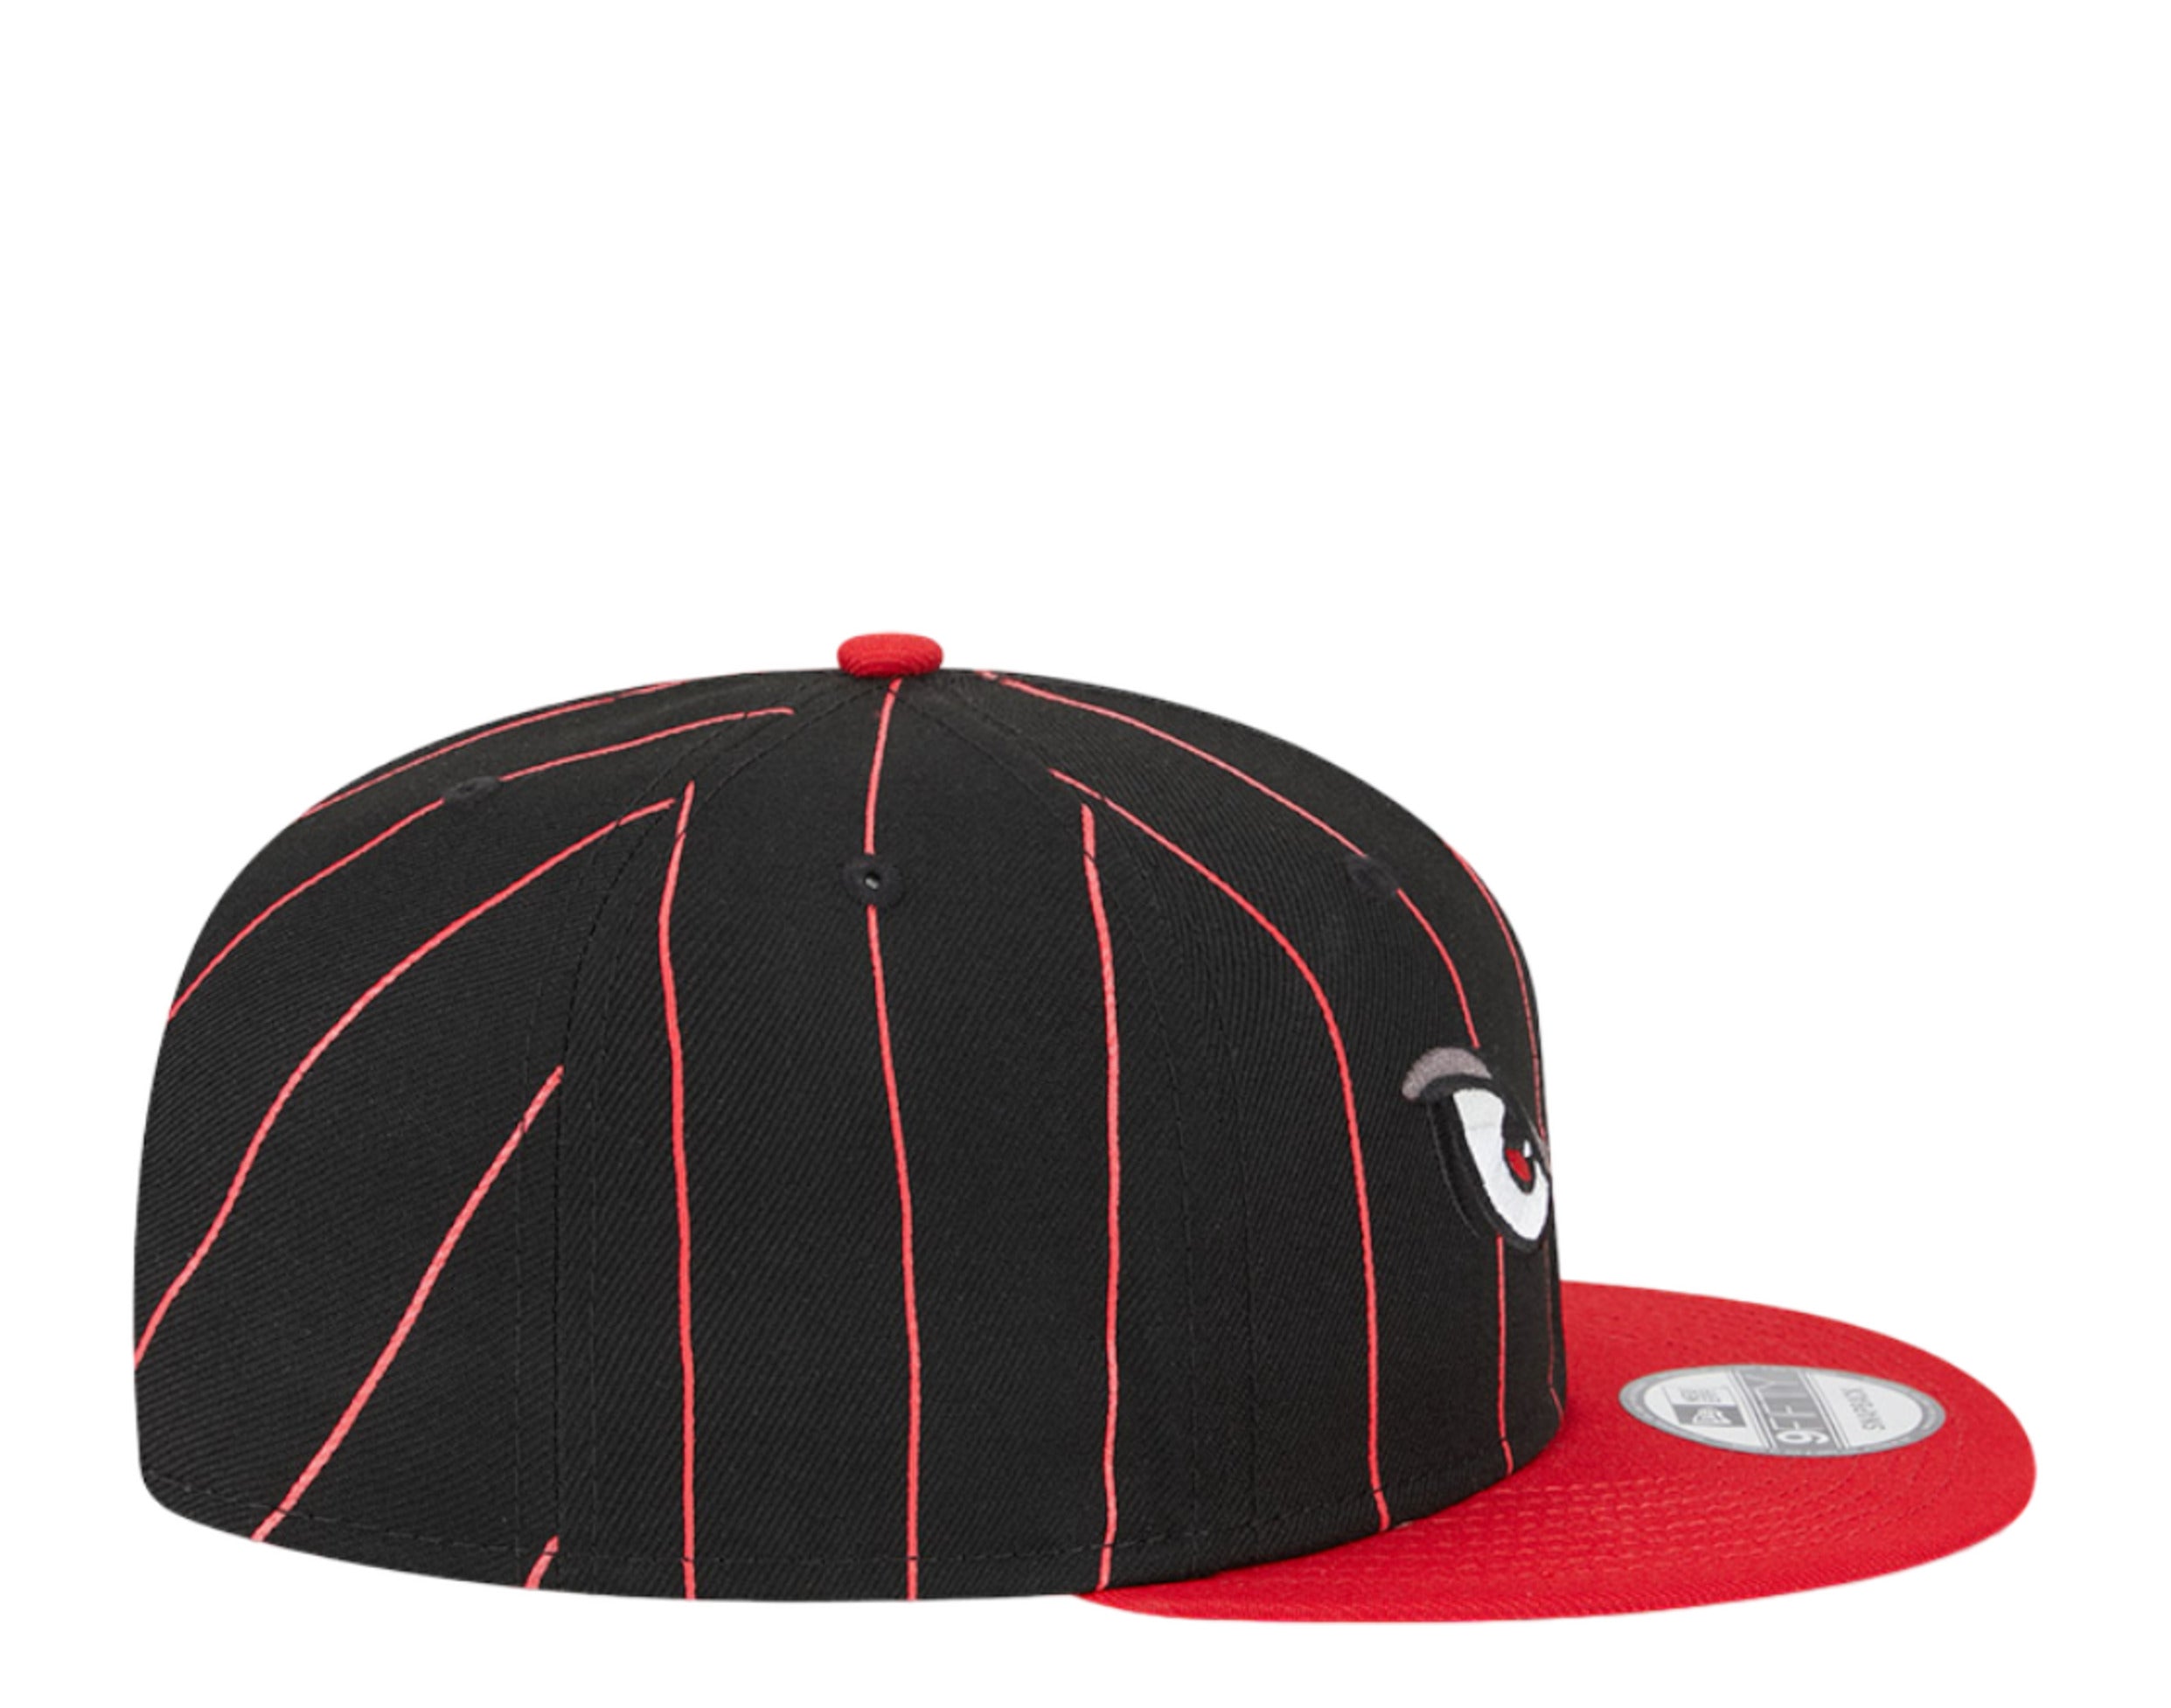 New Era New York Yankees Retro Pinstripe 9FIFTY Snapback Hat Cap White